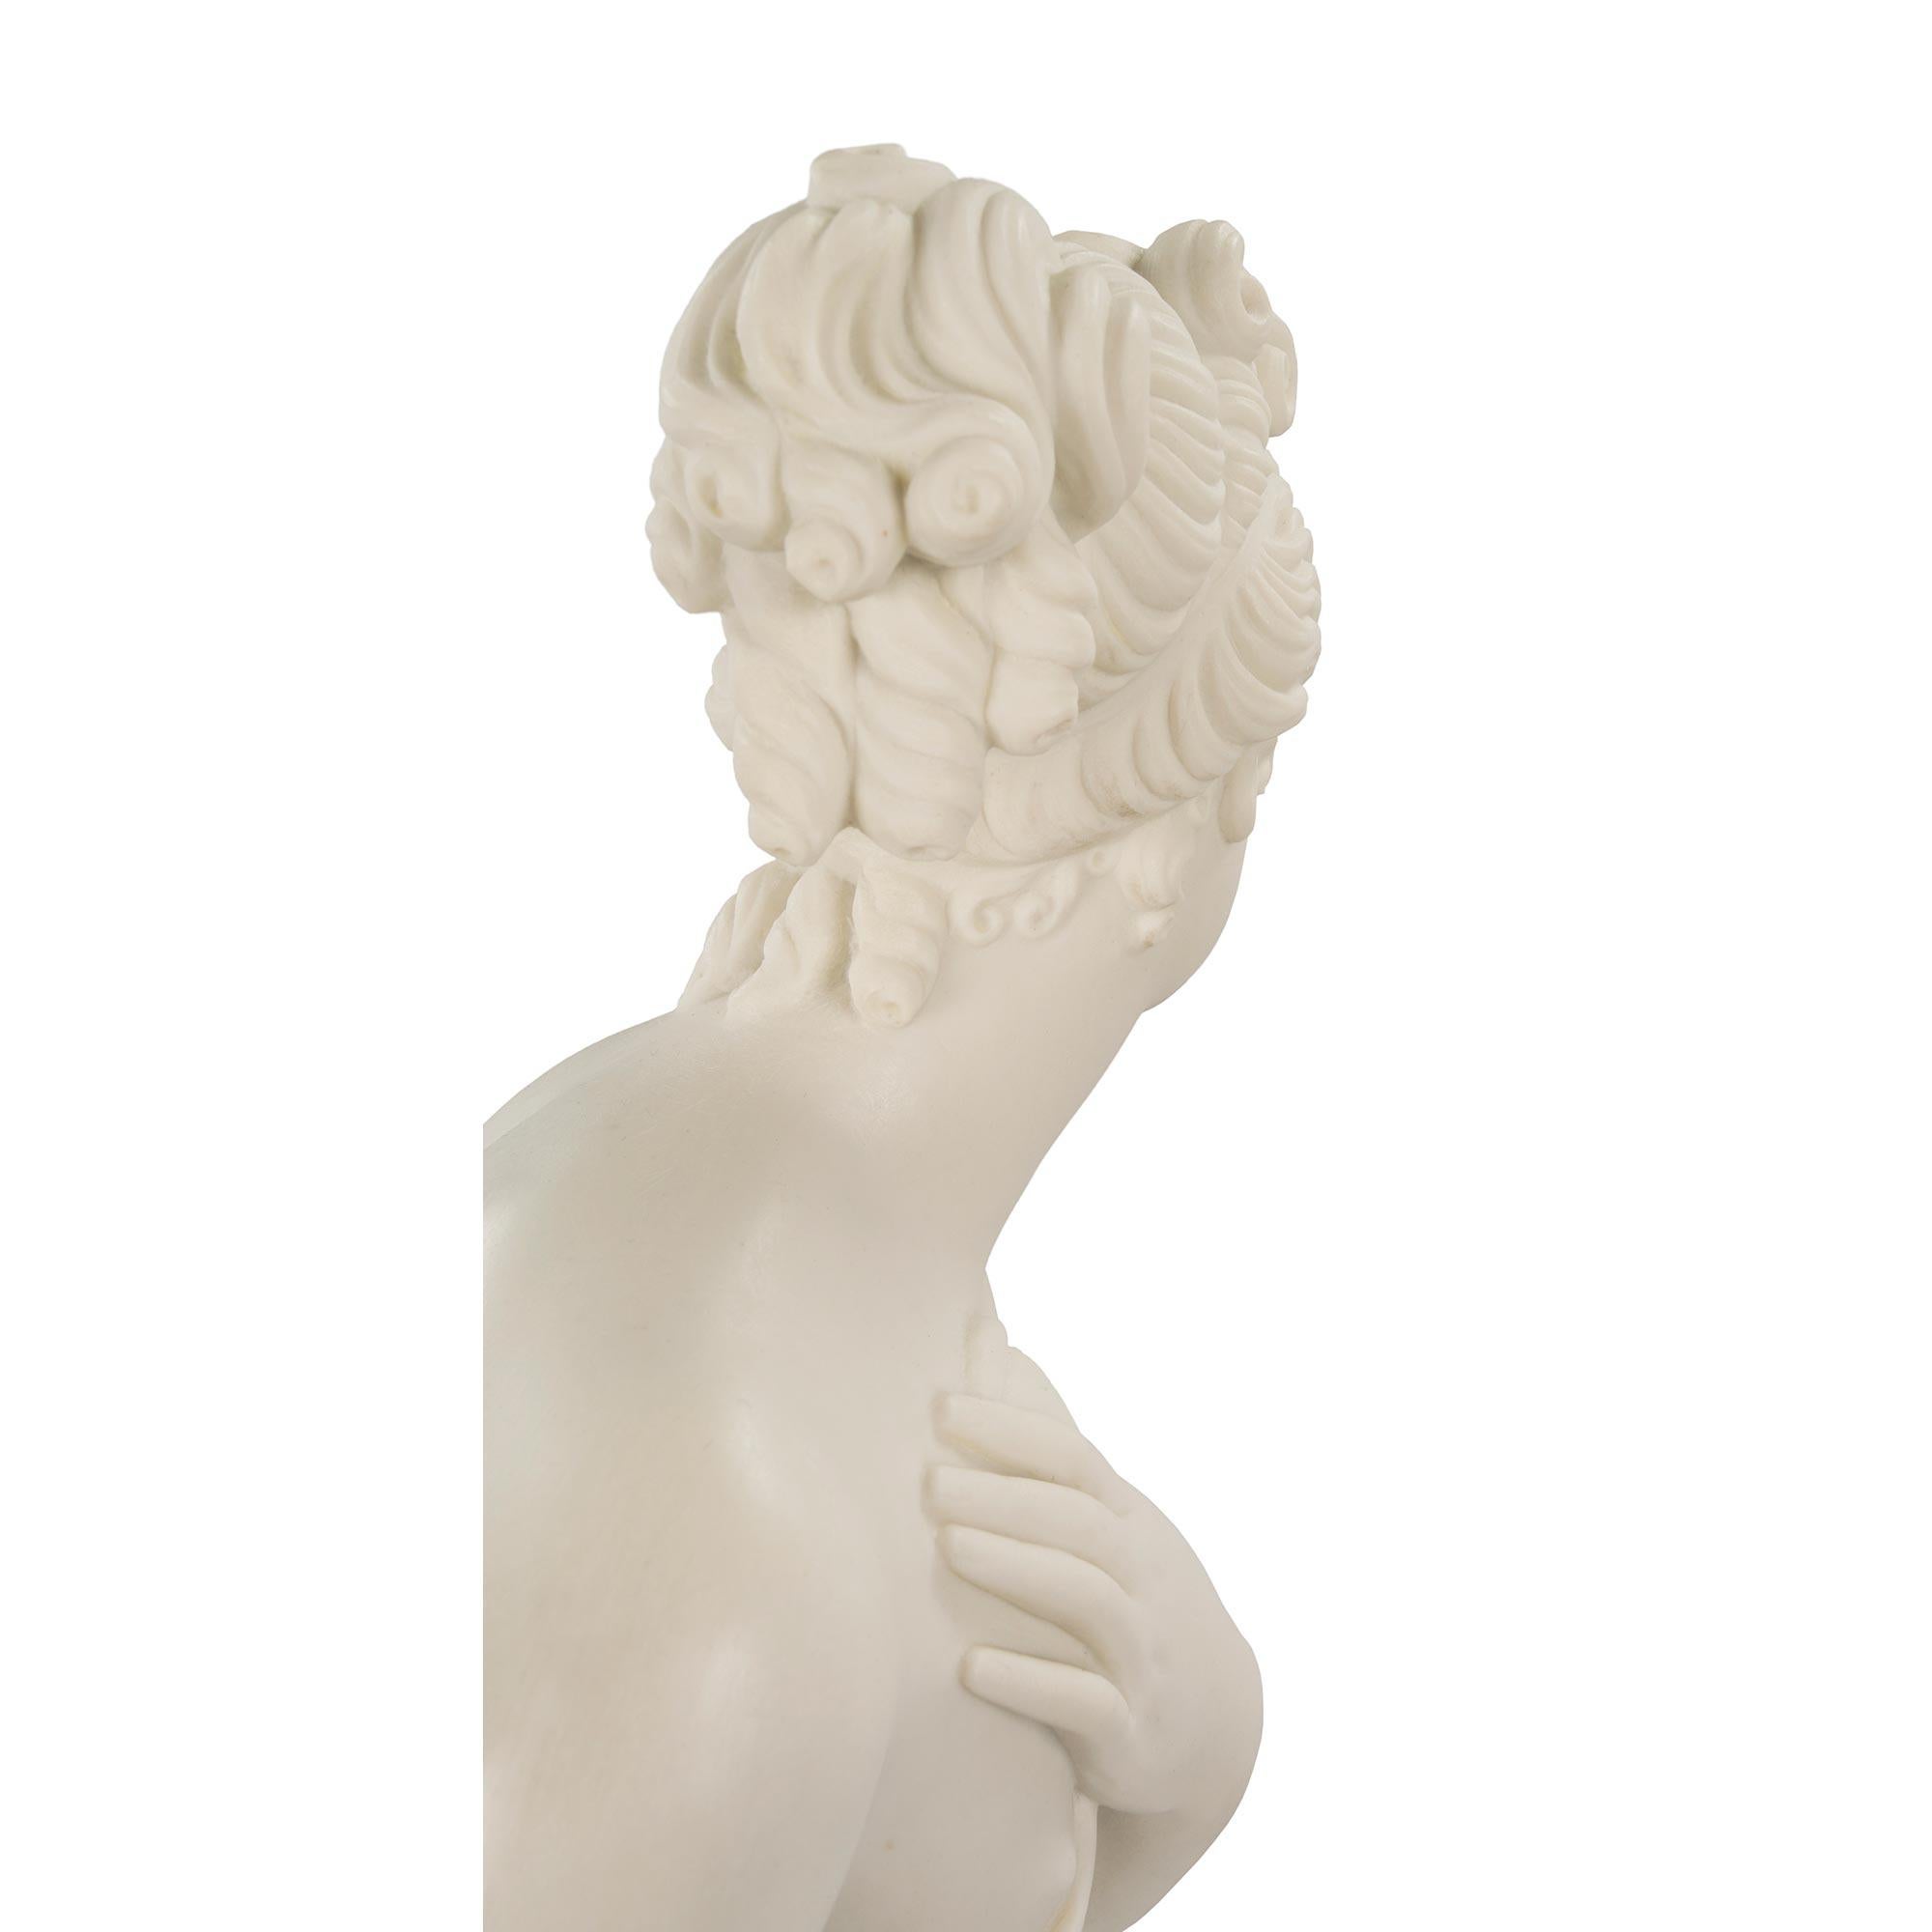 Italian 19th Century Neoclassical Style Biscuit de Sèvres Statue of Venus For Sale 2